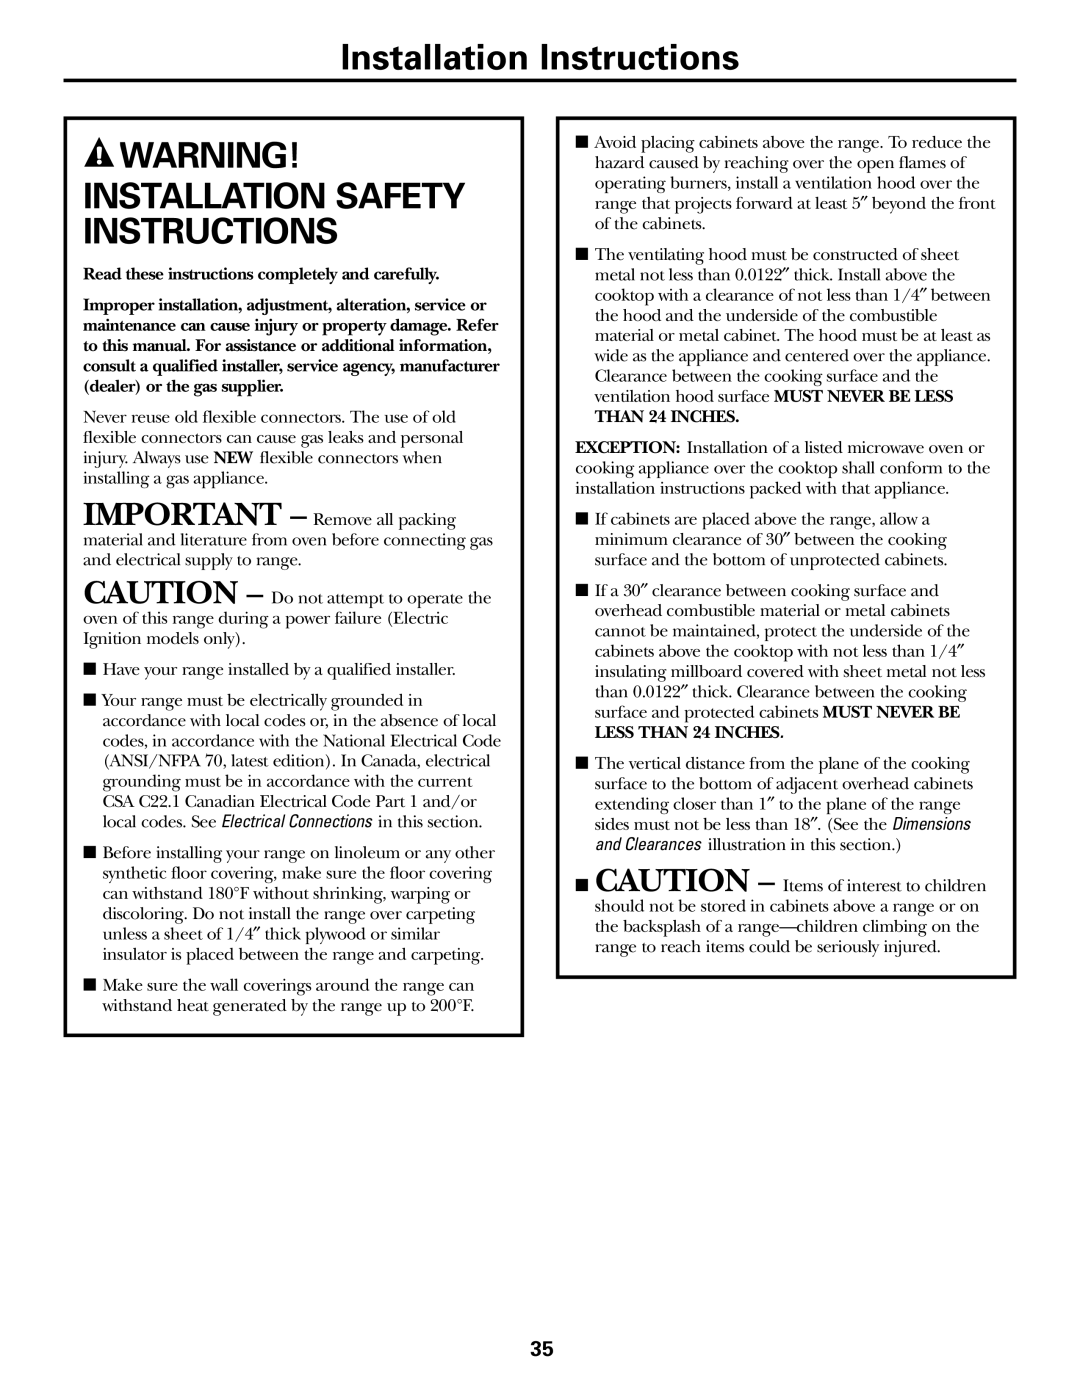 GE JGBP32, EGR2001, EGR2002, JGBP33, JGBP29, JGBP28 manual Installation Instructions, Installation Safety Instructions 